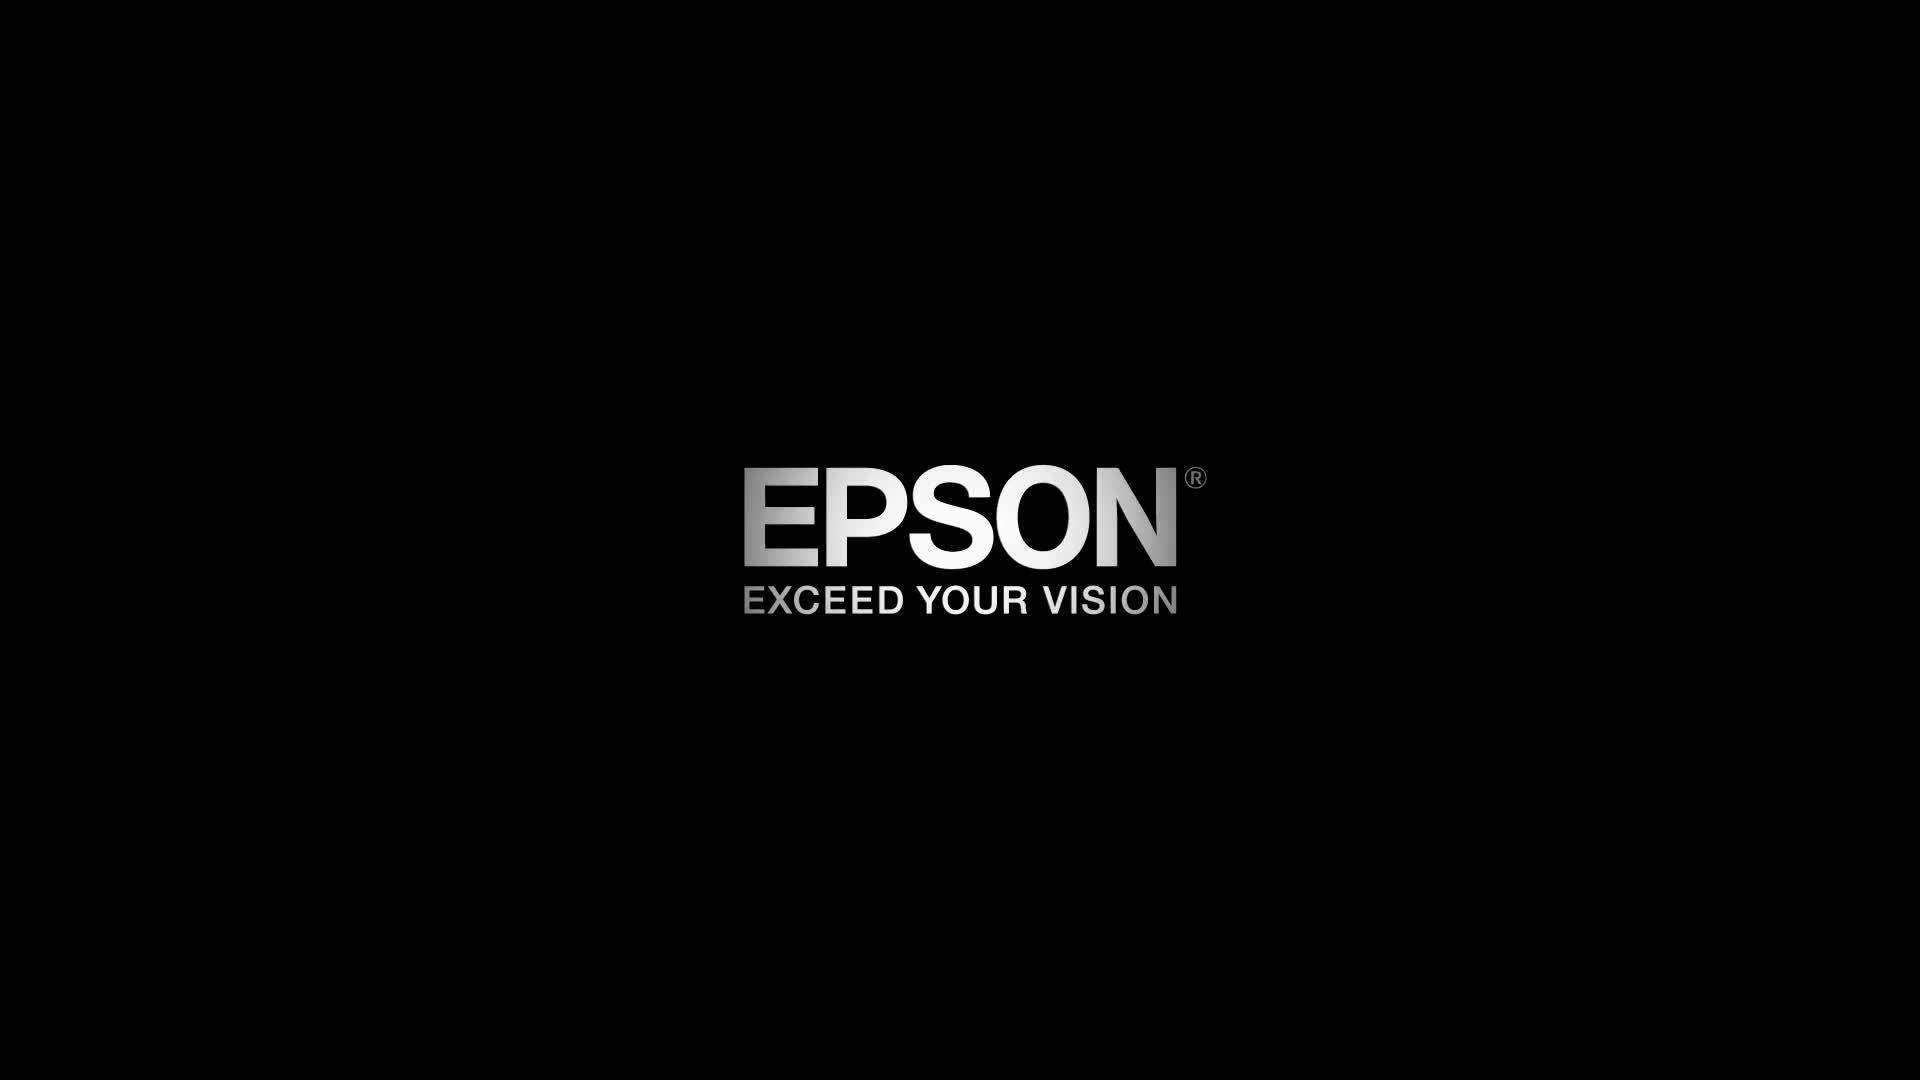 Epson Enhanced Paper, DIN A2, 192g/m² média grand format - Papier